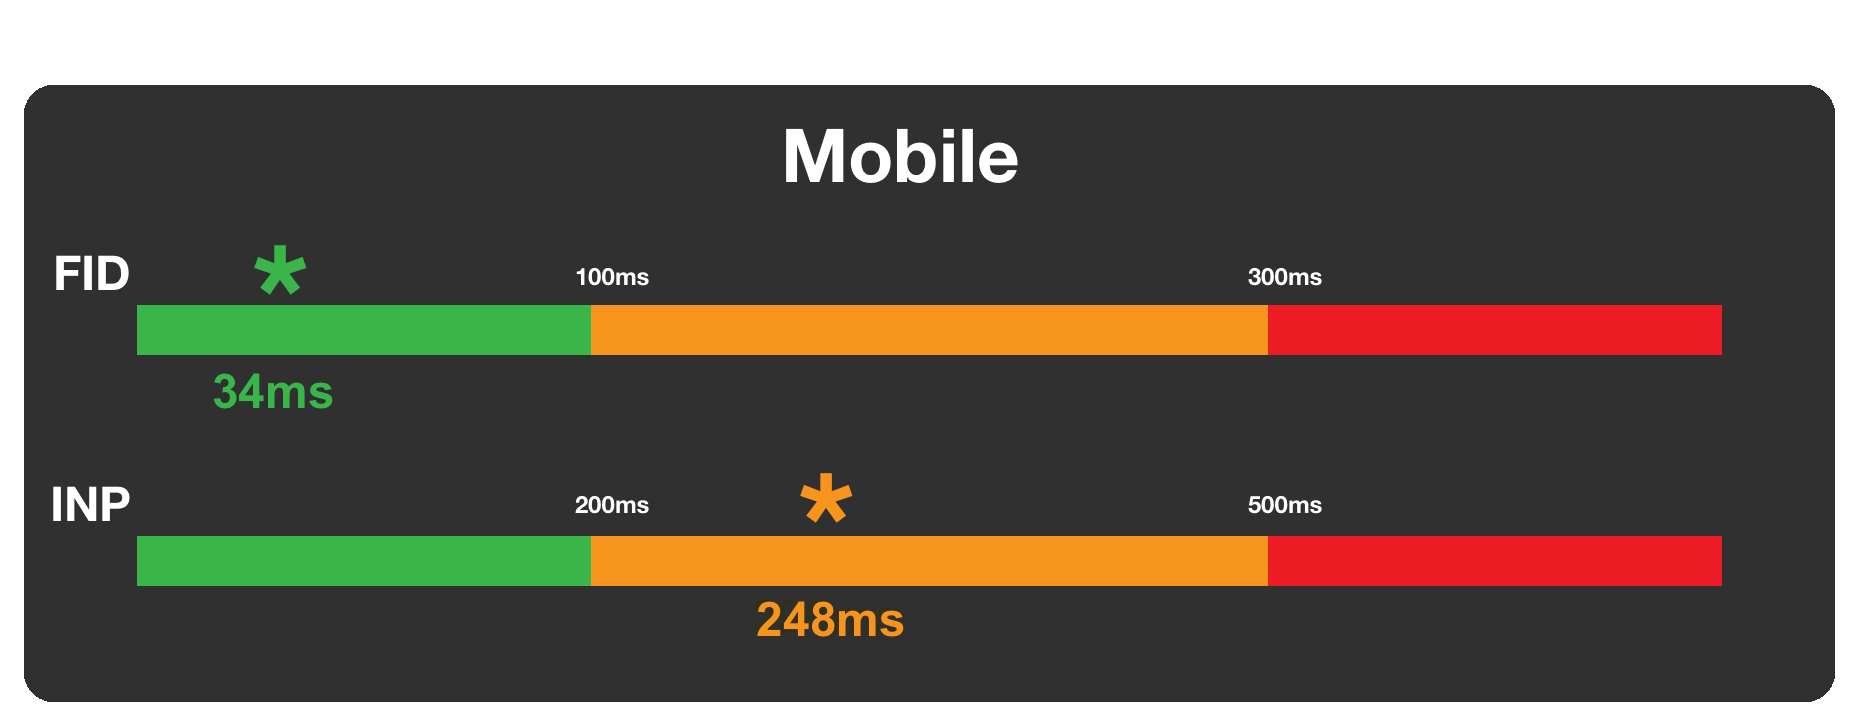 RYG bar showing inp vs fid for mobile